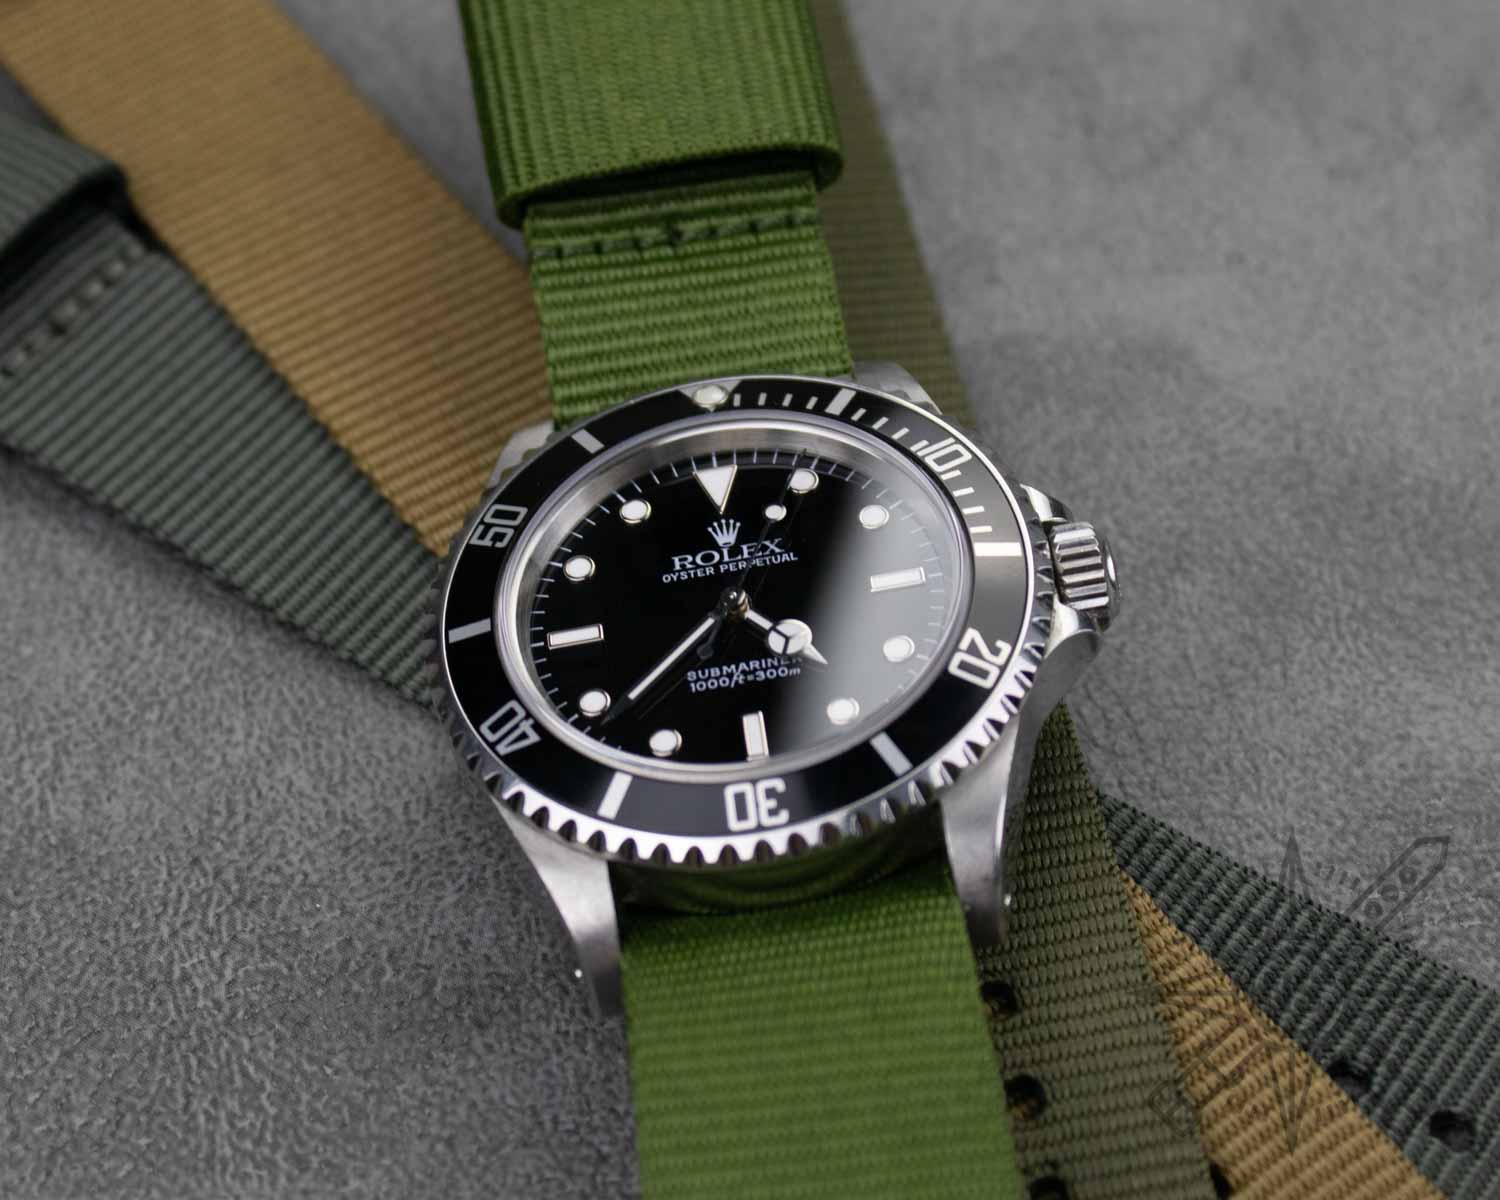 Khaki green military watch strap on a rolex submariner